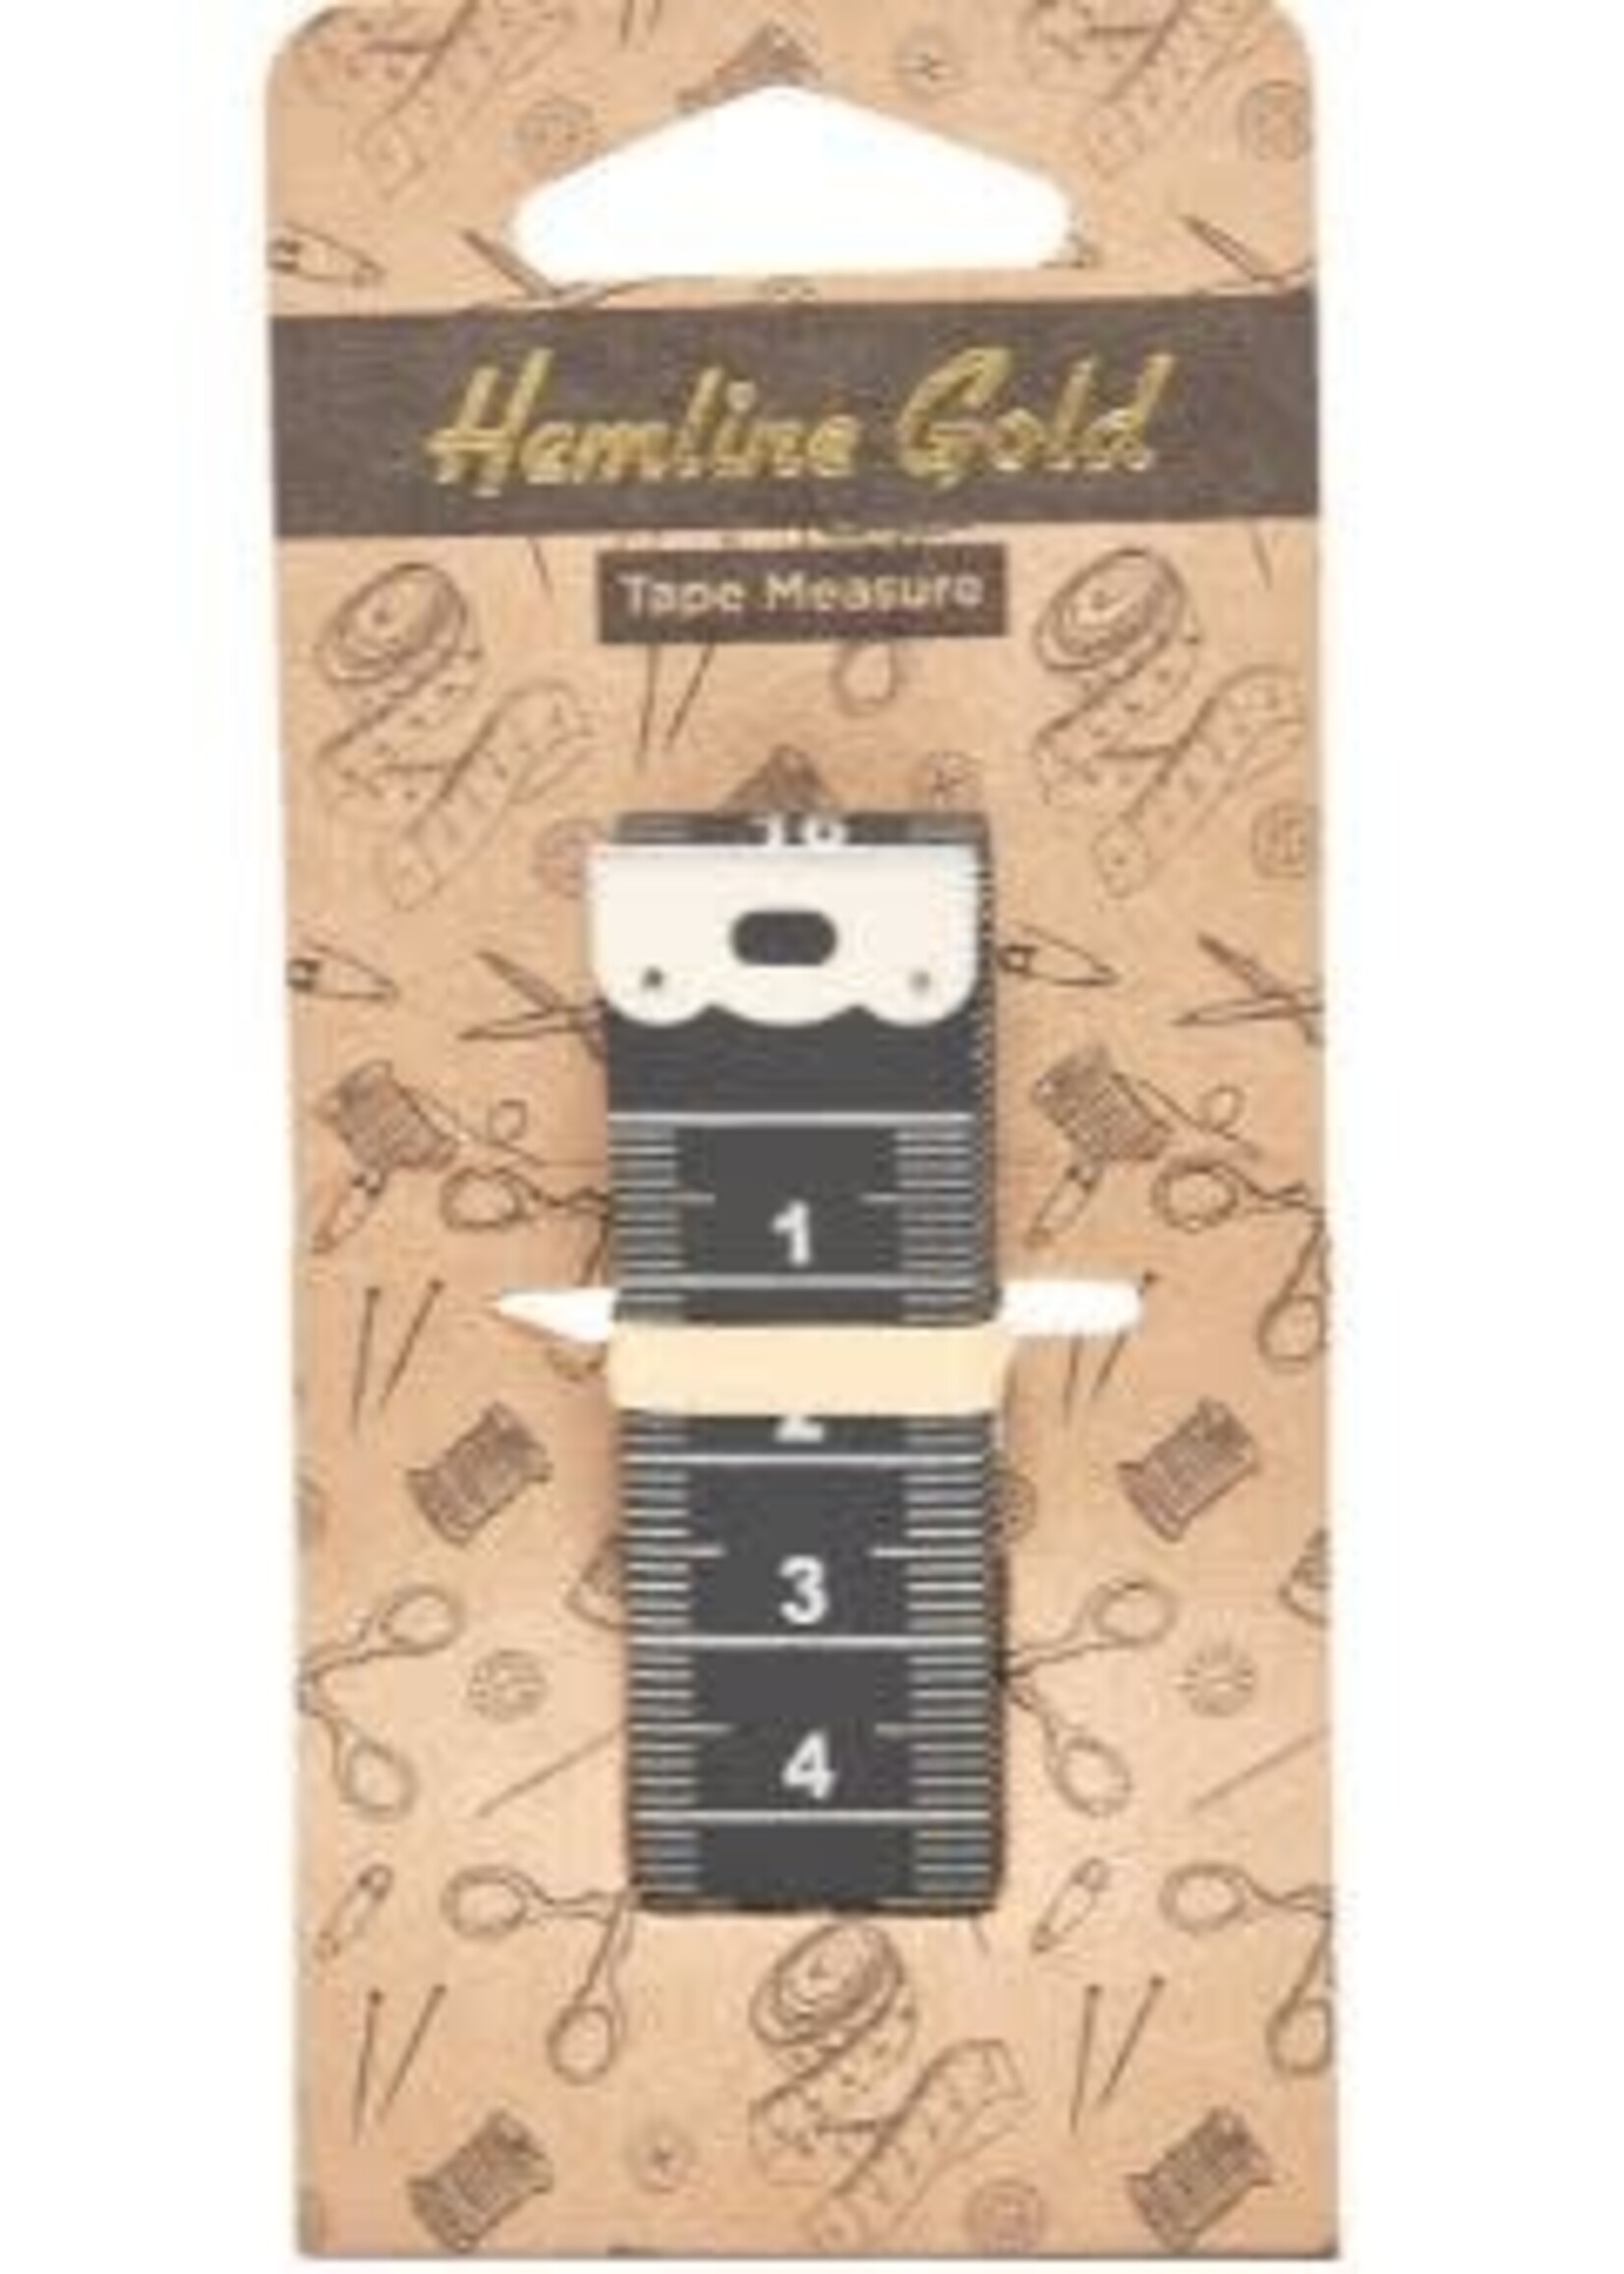 H.A. KIDD Hemline Gold Tape Measure